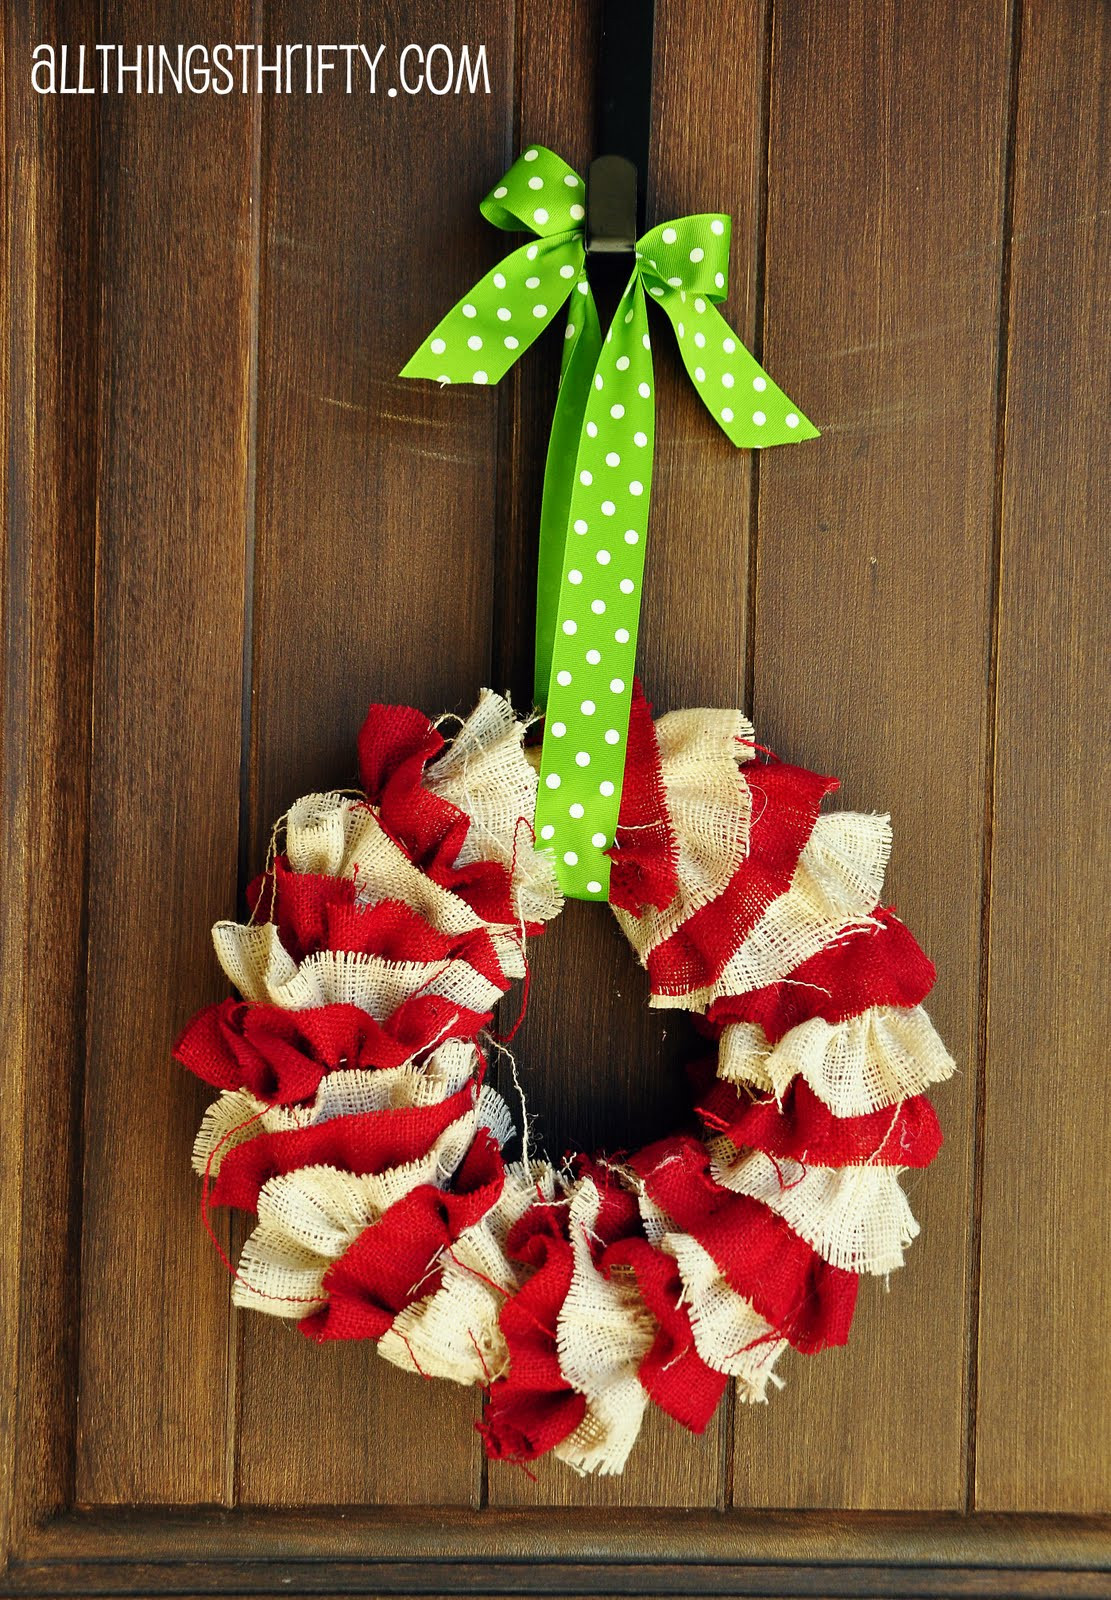 Best ideas about Christmas Wreaths DIY
. Save or Pin Tutorial DIY Christmas Wreath Now.